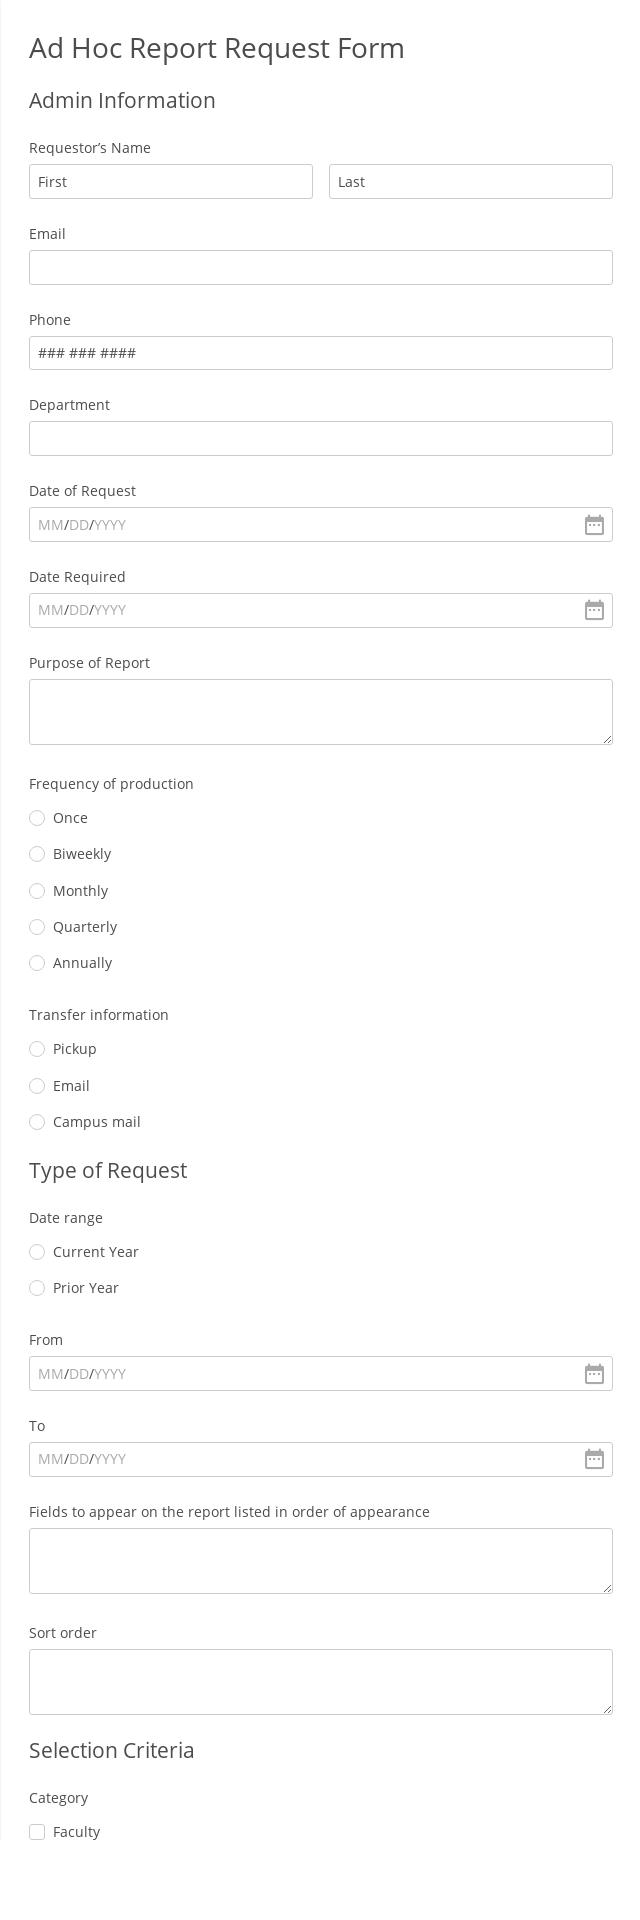 Ad Hoc Report Request Form